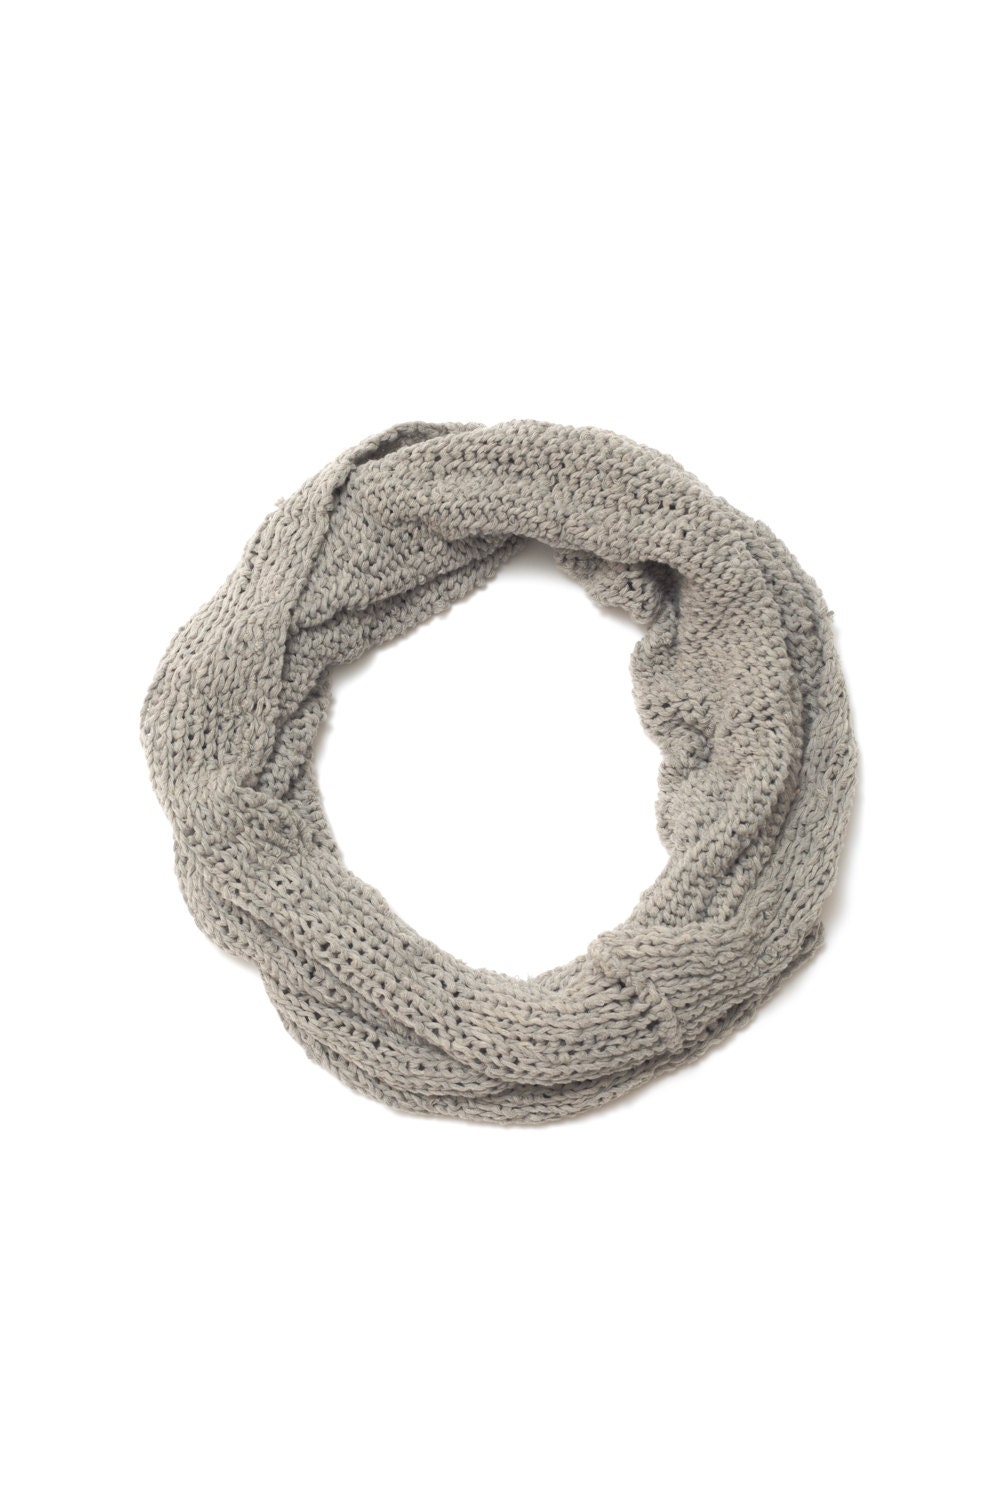 Infinity scarf ,knitting shawl, handmade shurg